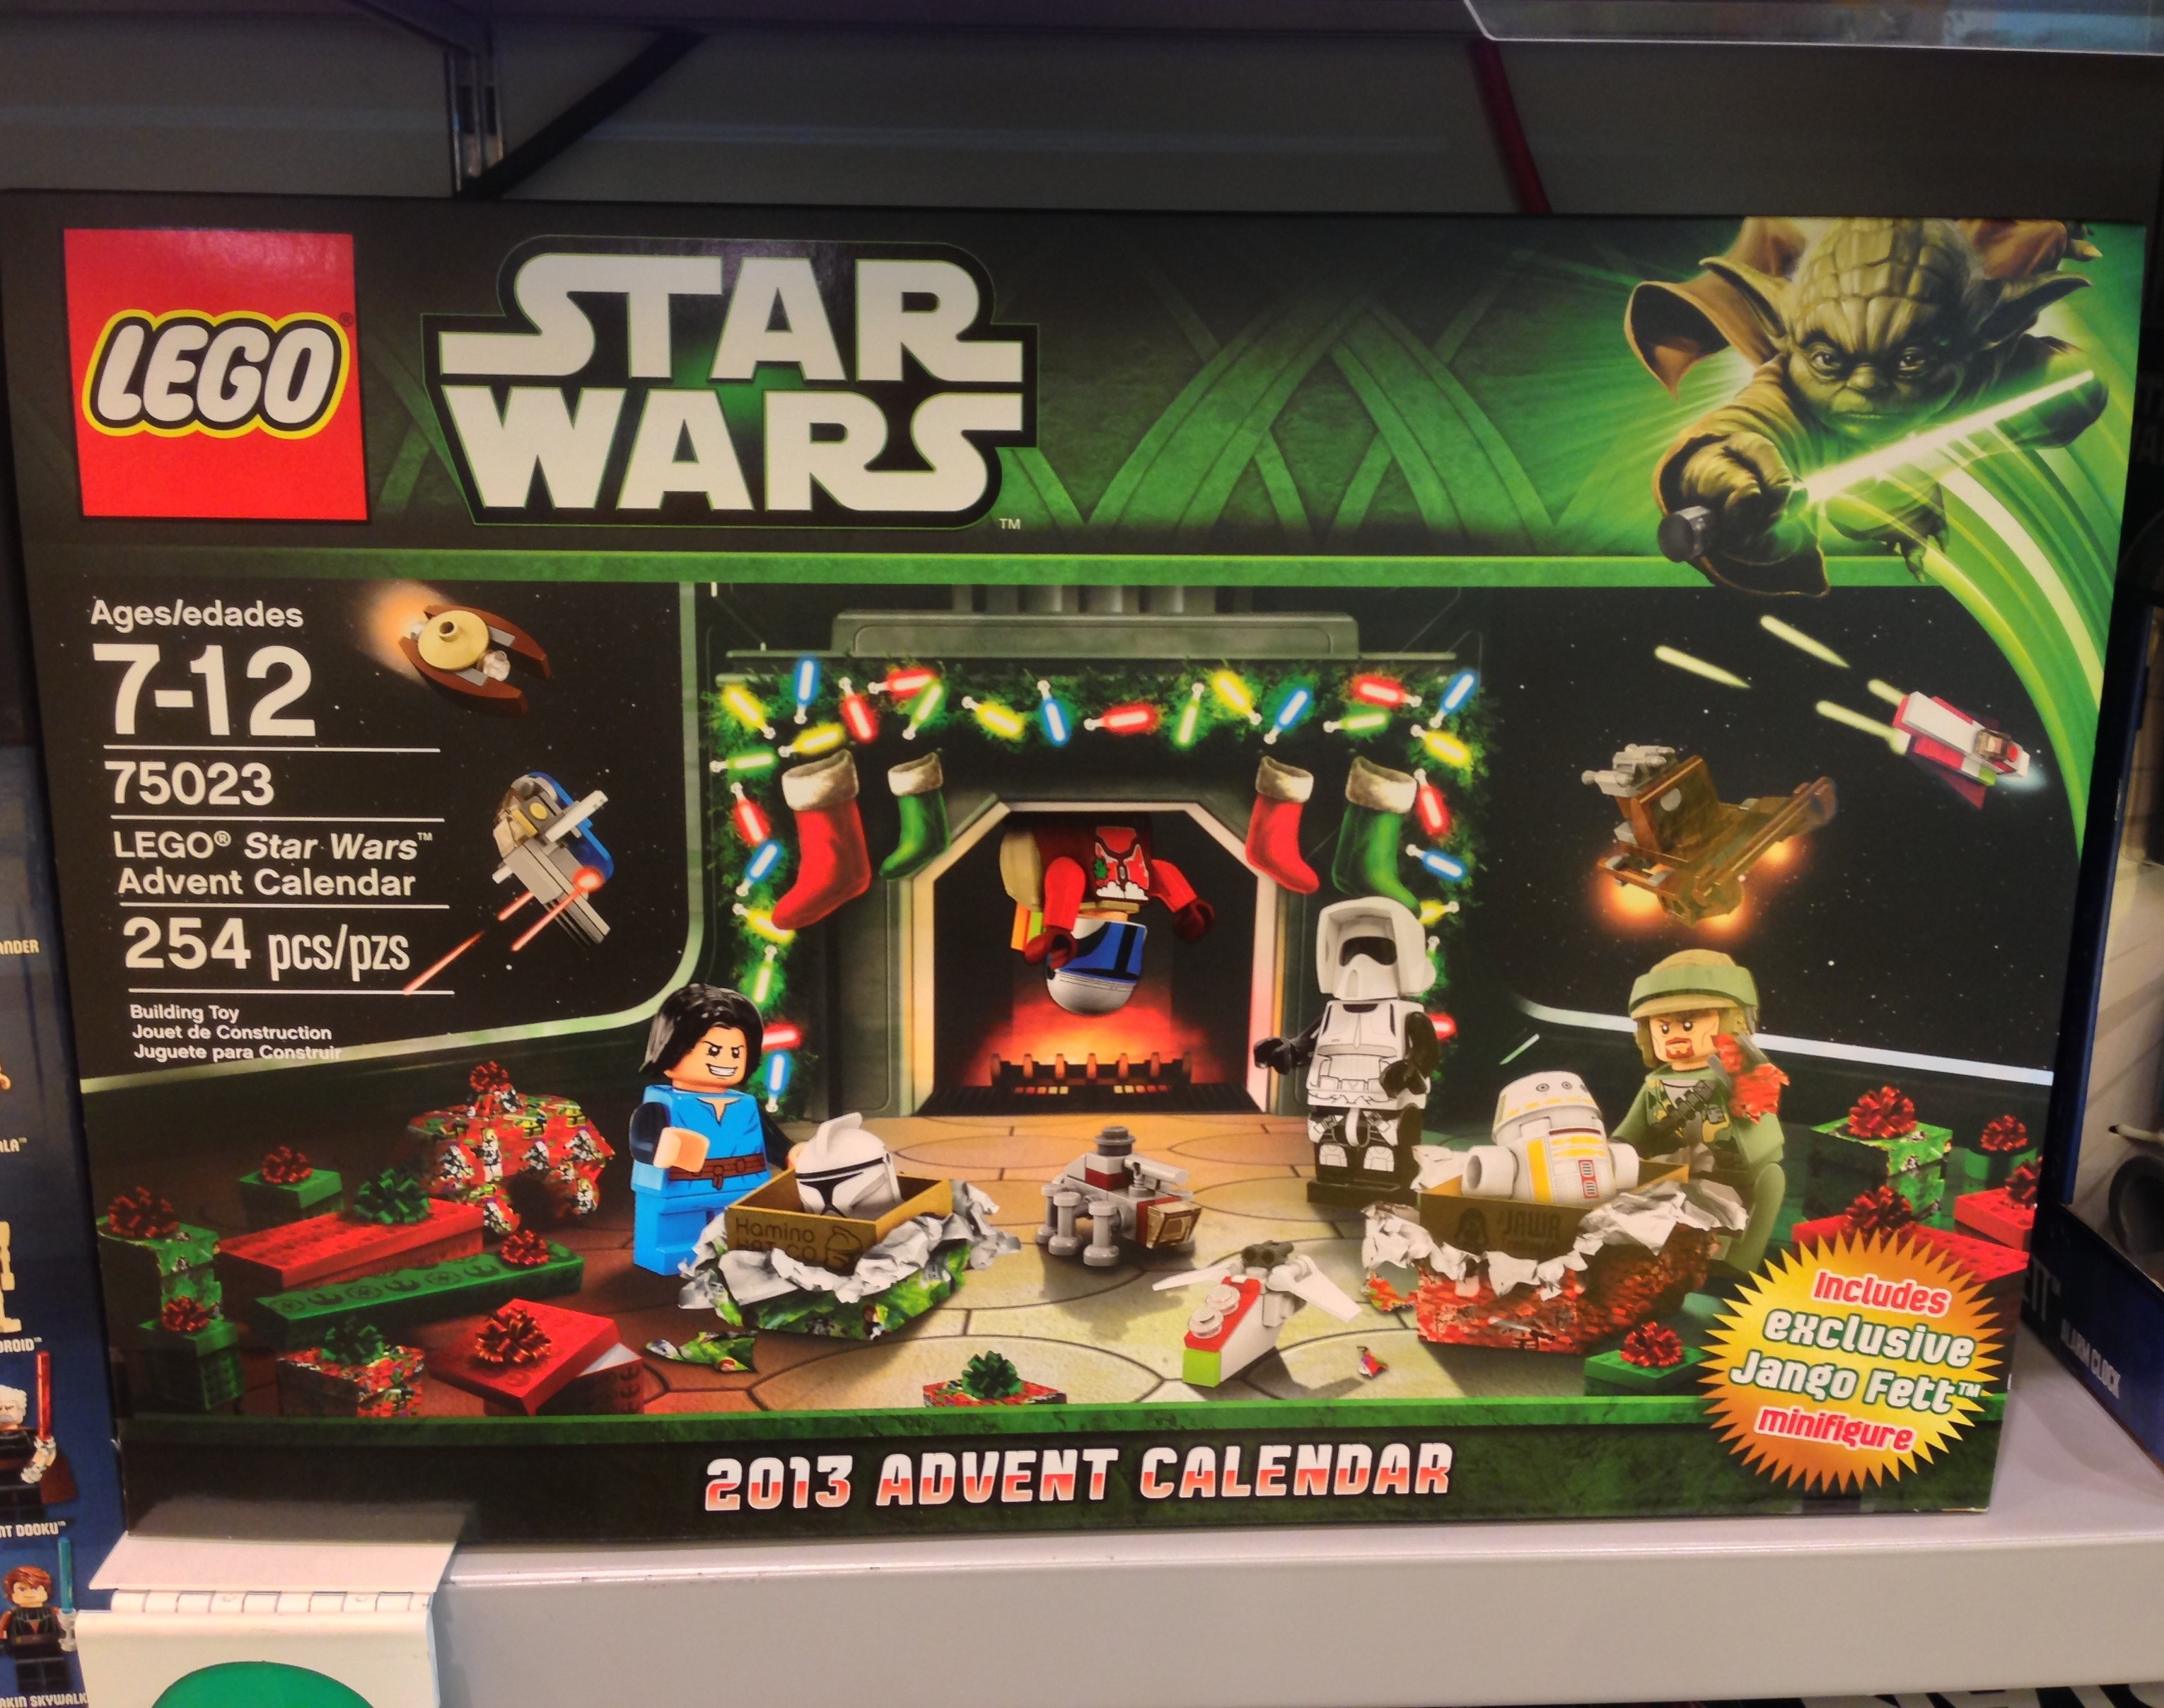 2013 LEGO Star Wars Advent Calendar 75023 Released in Stores! Bricks